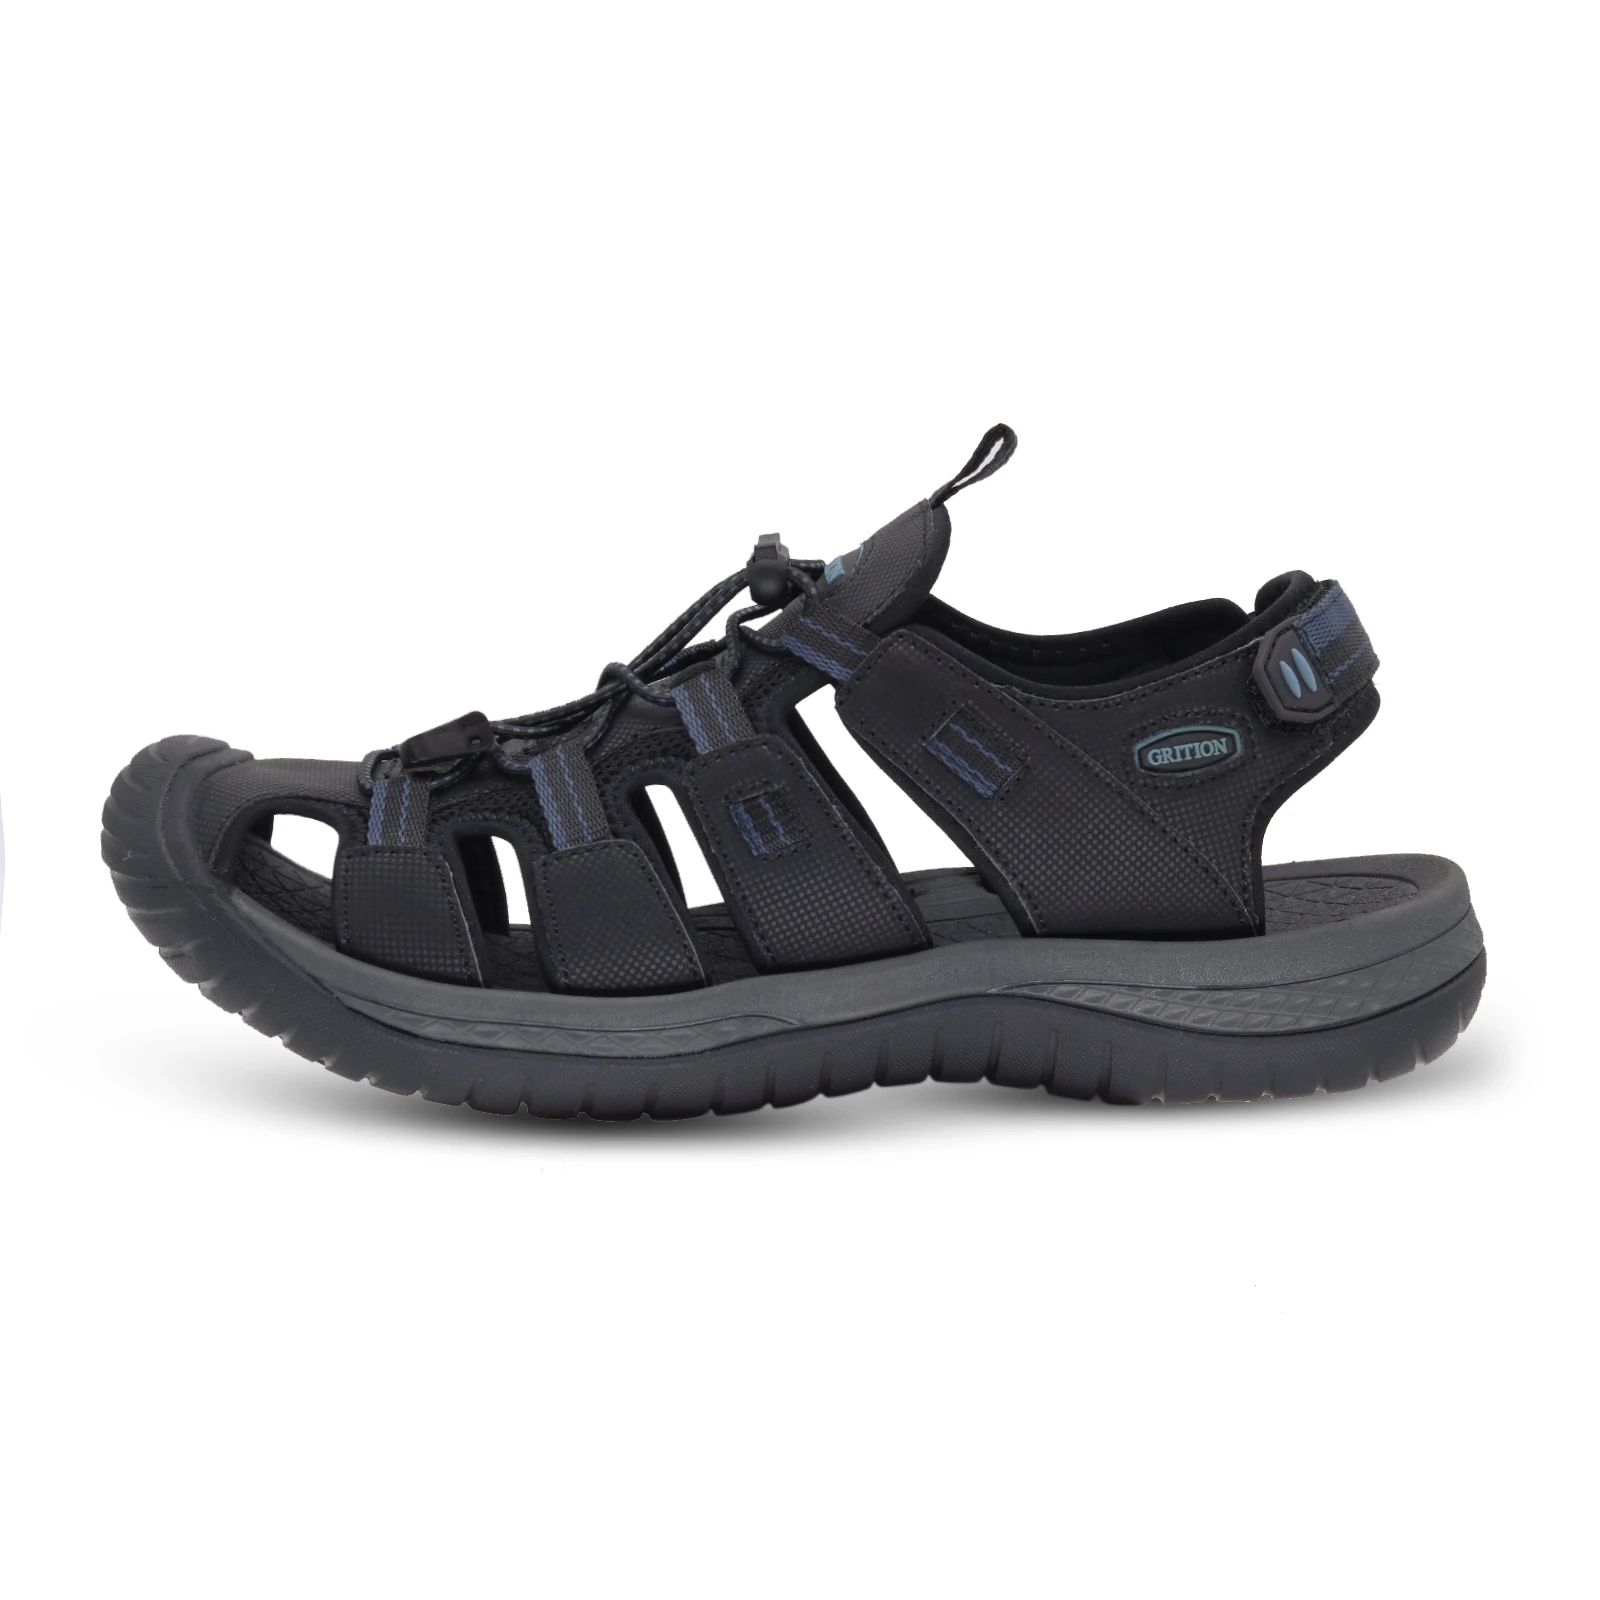 Men Summer Sport Sandals Outdoor Non Slip Comfortable Adjustable Breatha... - $140.08